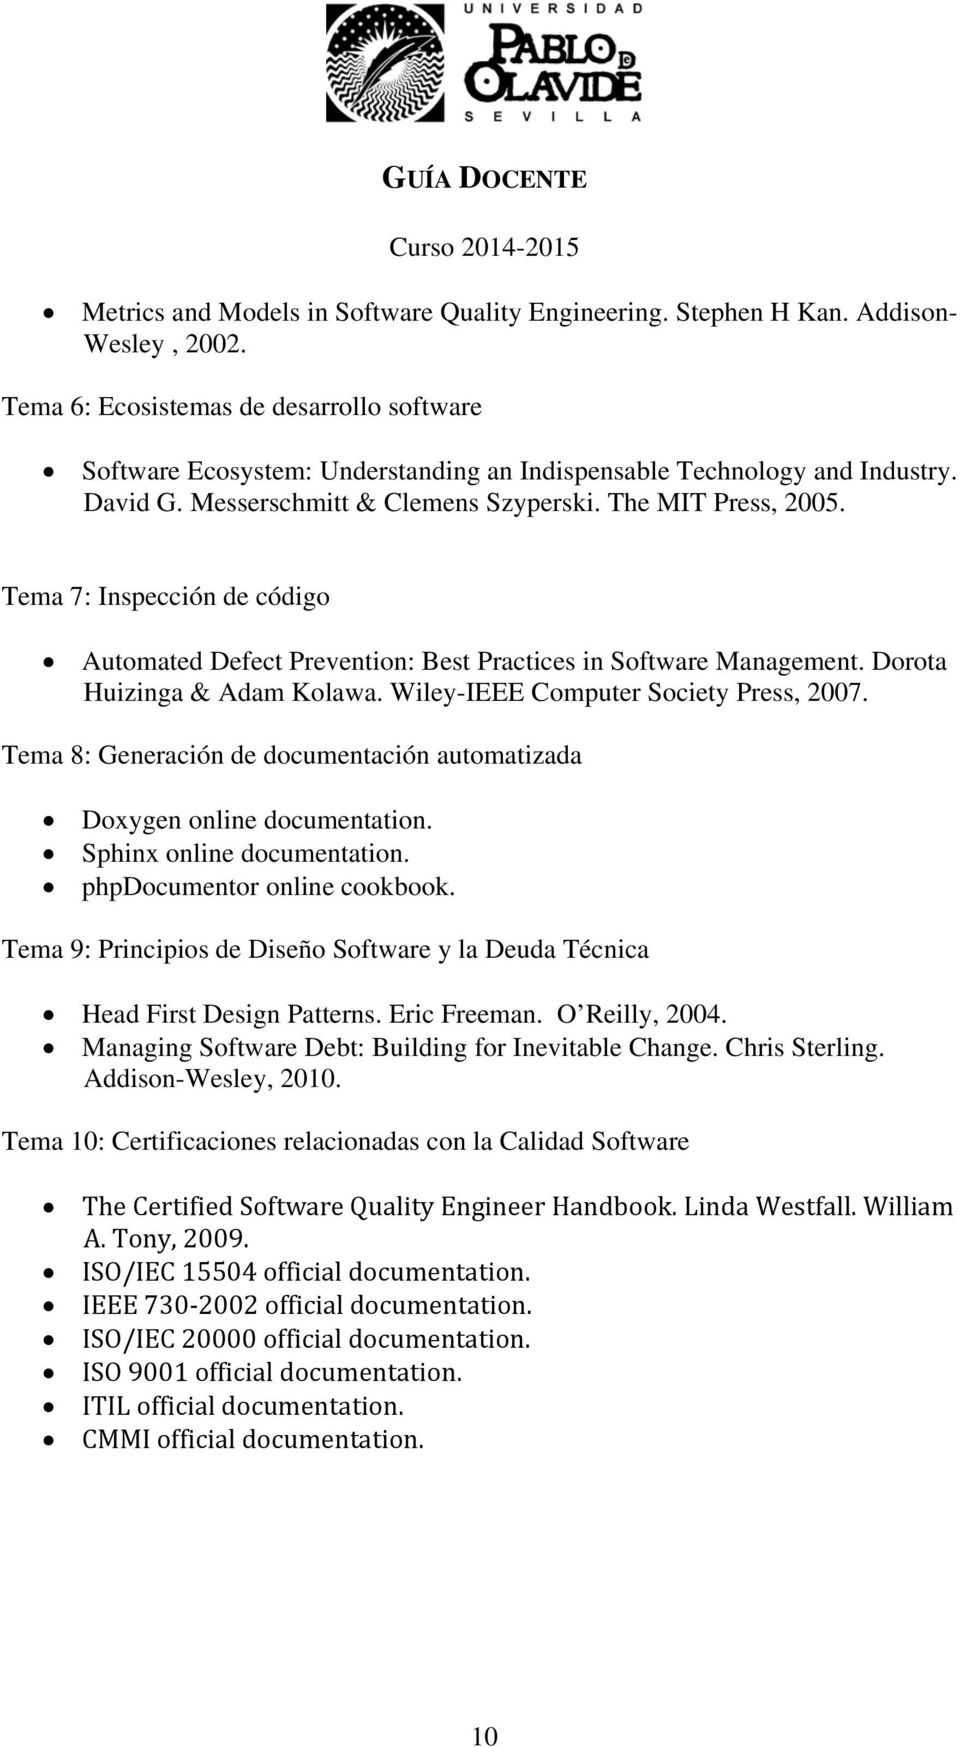 Tema 7: Inspección de código Automated Defect Prevention: Best Practices in Software Management. Dorota Huizinga & Adam Kolawa. Wiley-IEEE Computer Society Press, 2007.